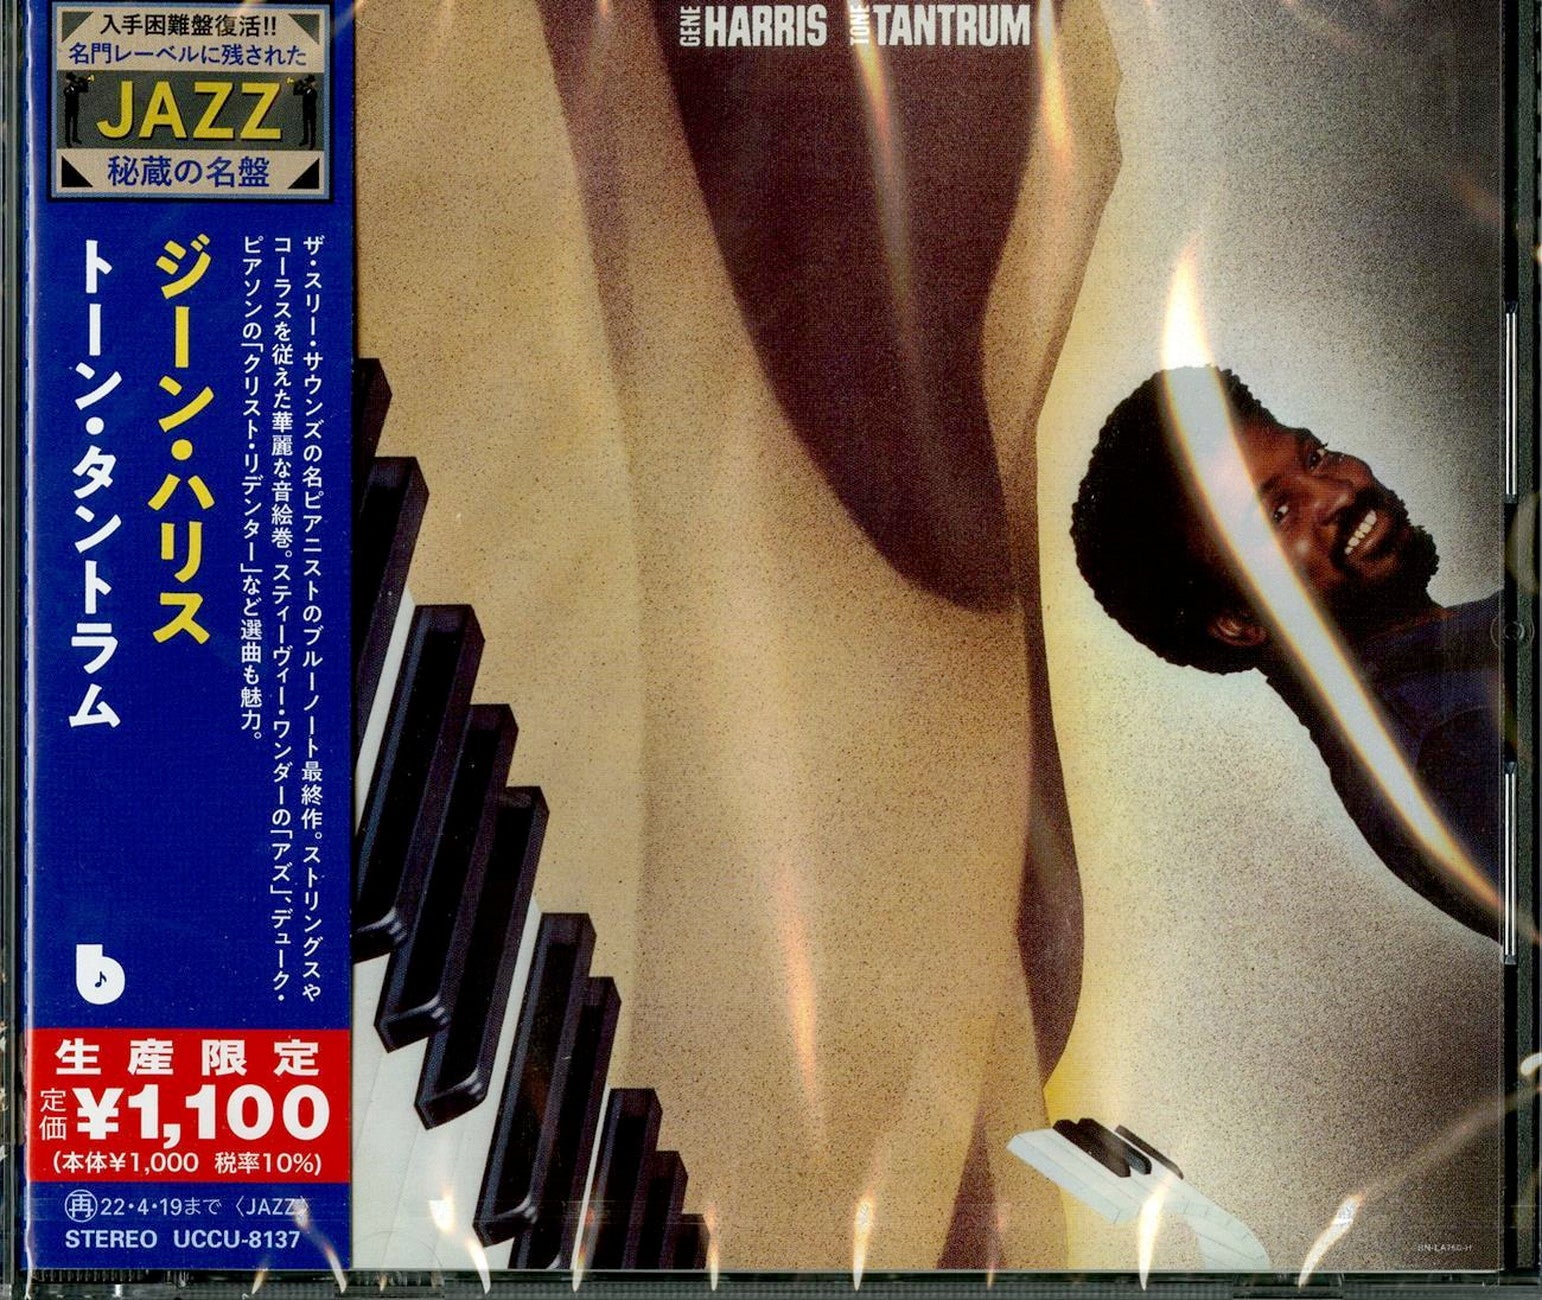 Gene Harris - Tone Tantram - Japan CD Limited Edition – CDs Vinyl